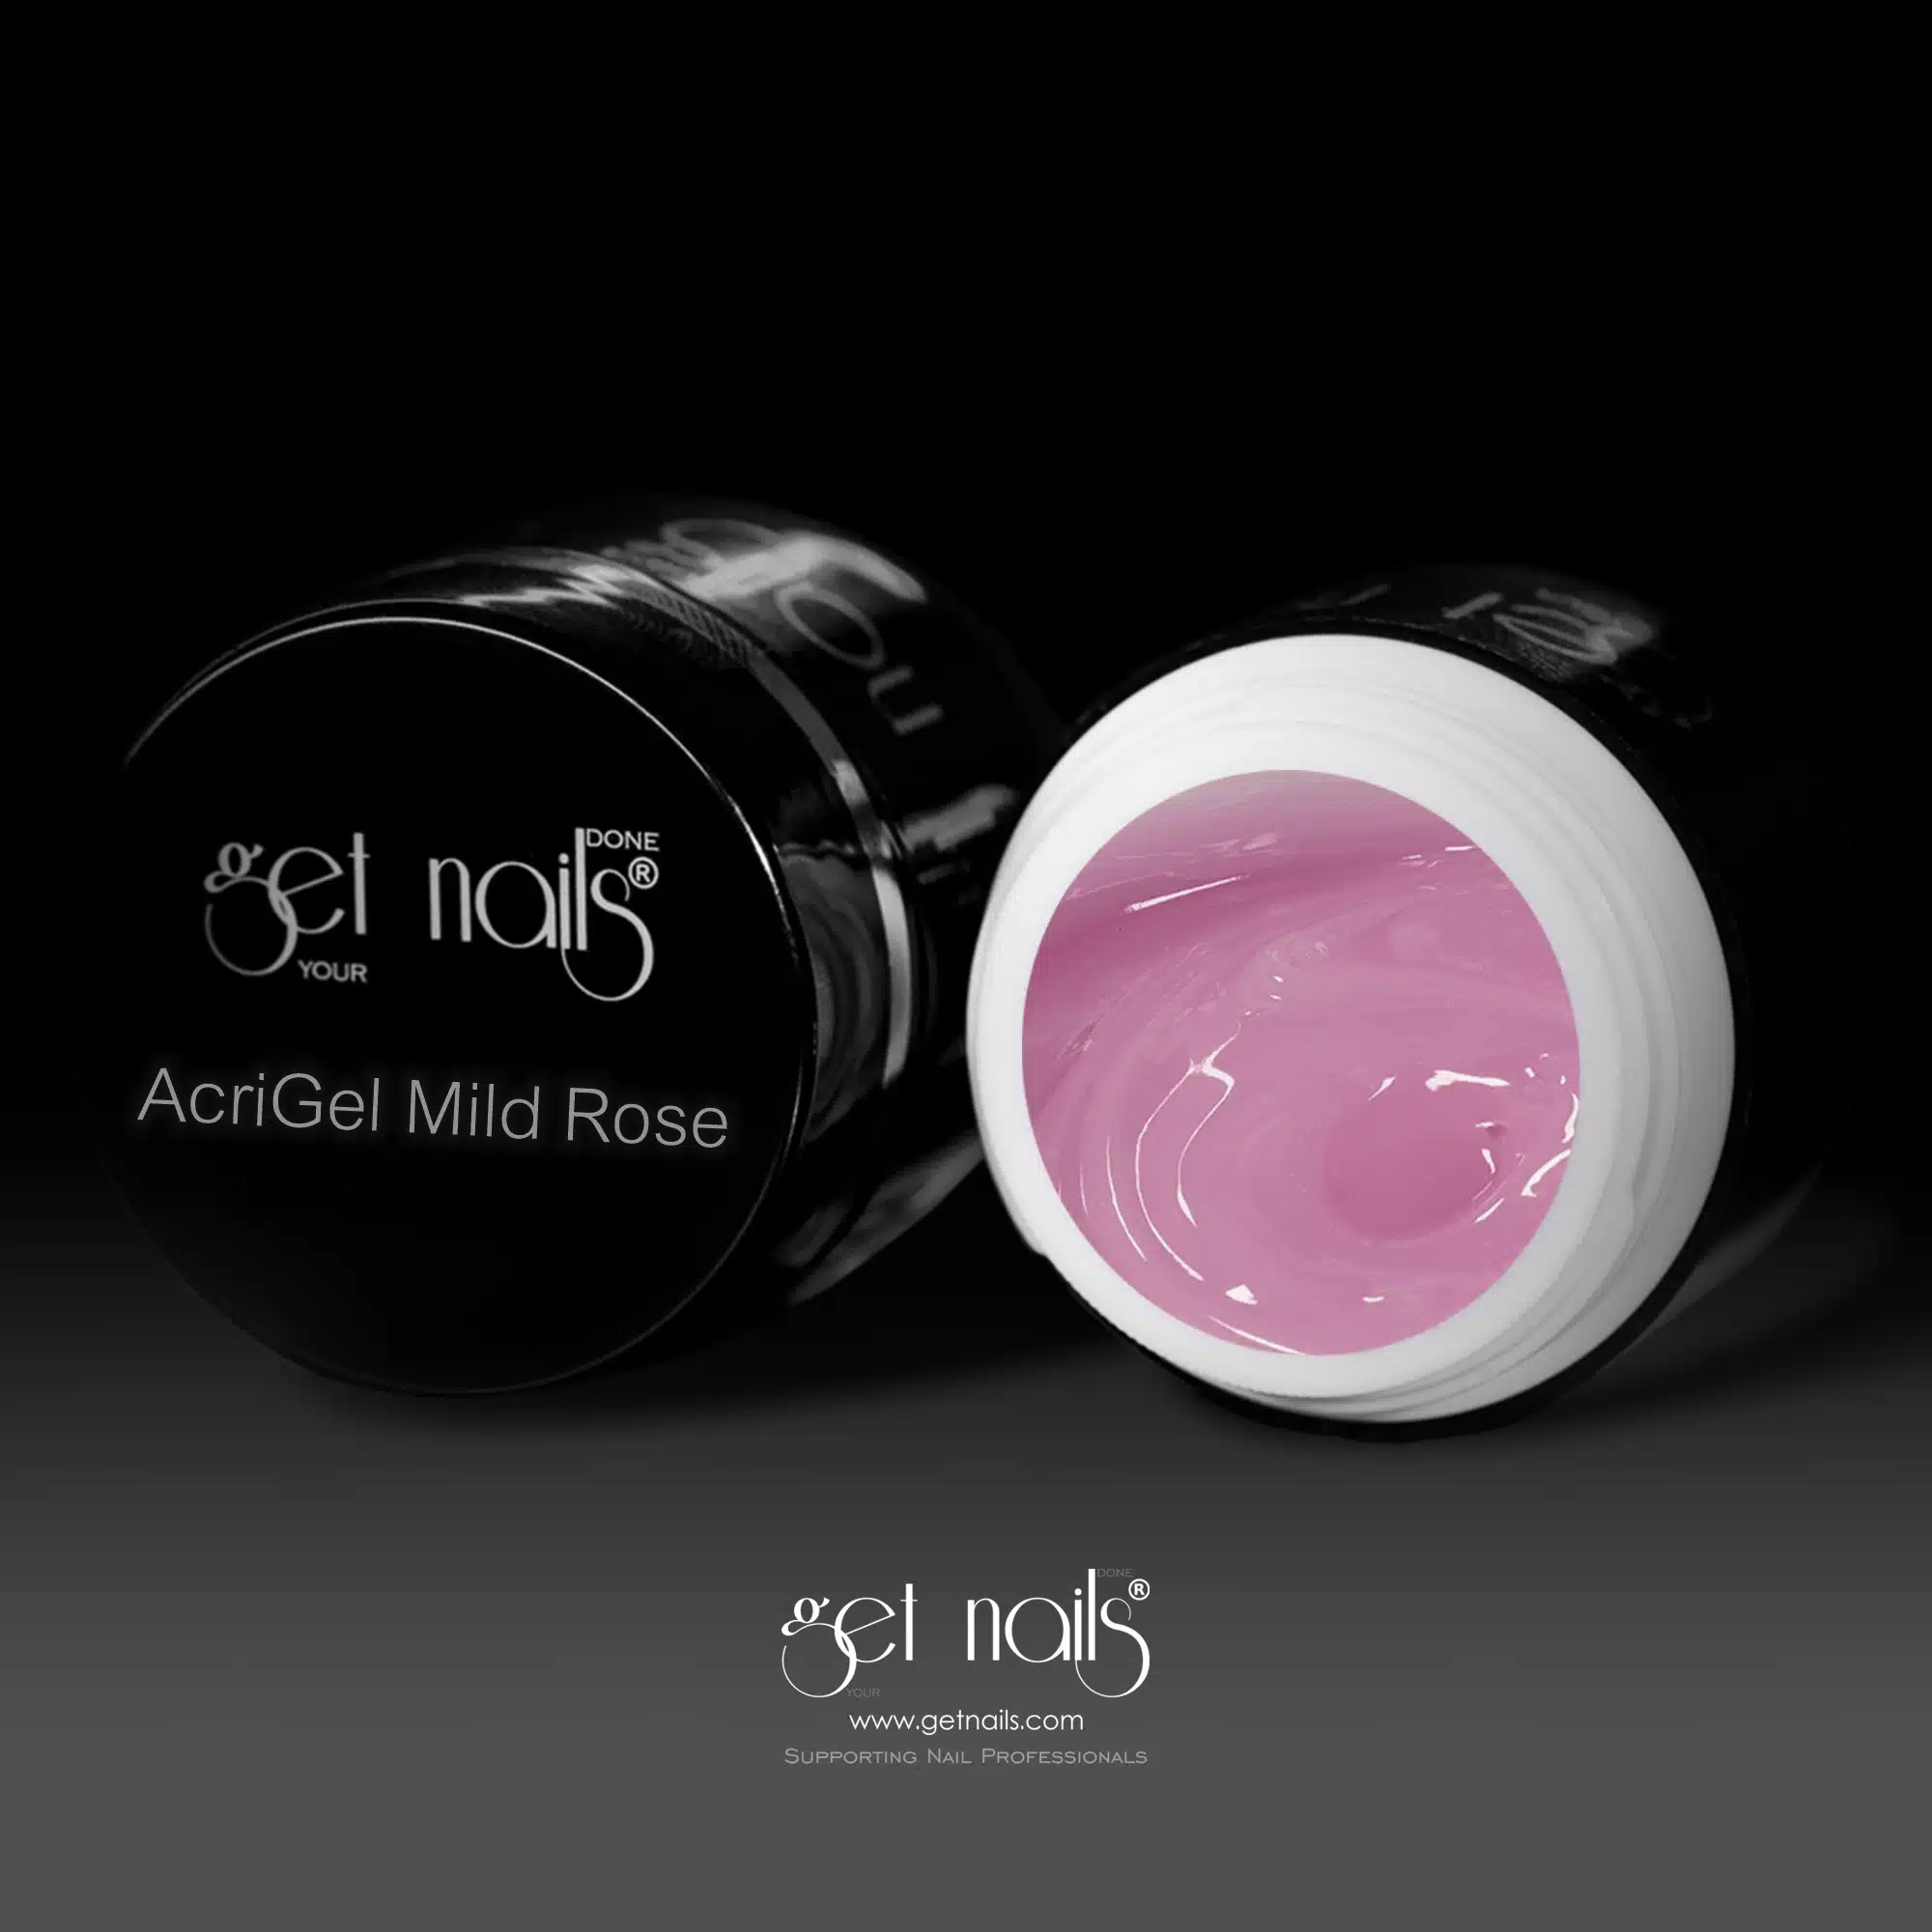 Get Nails Austria - AcriGel Mild Rose Muster